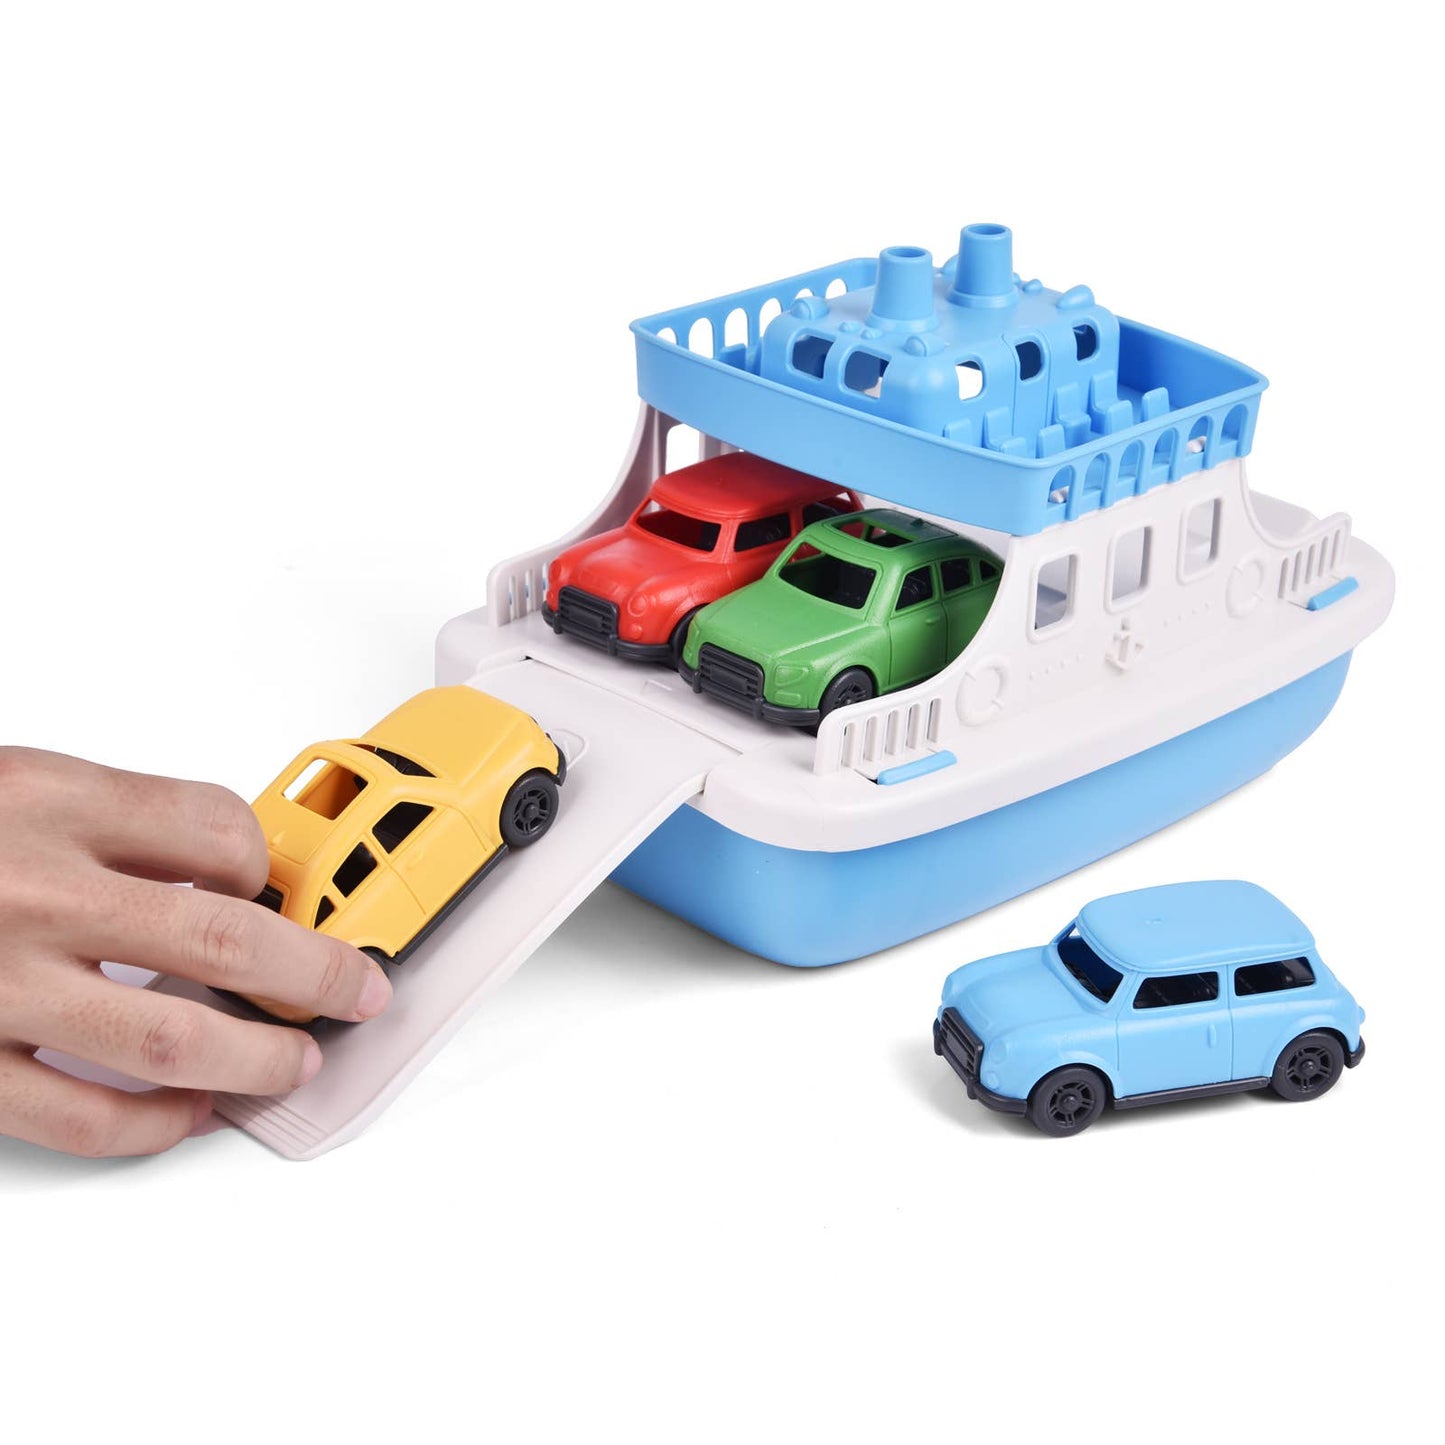 Toy Boat for Bath w/ 4 Cars